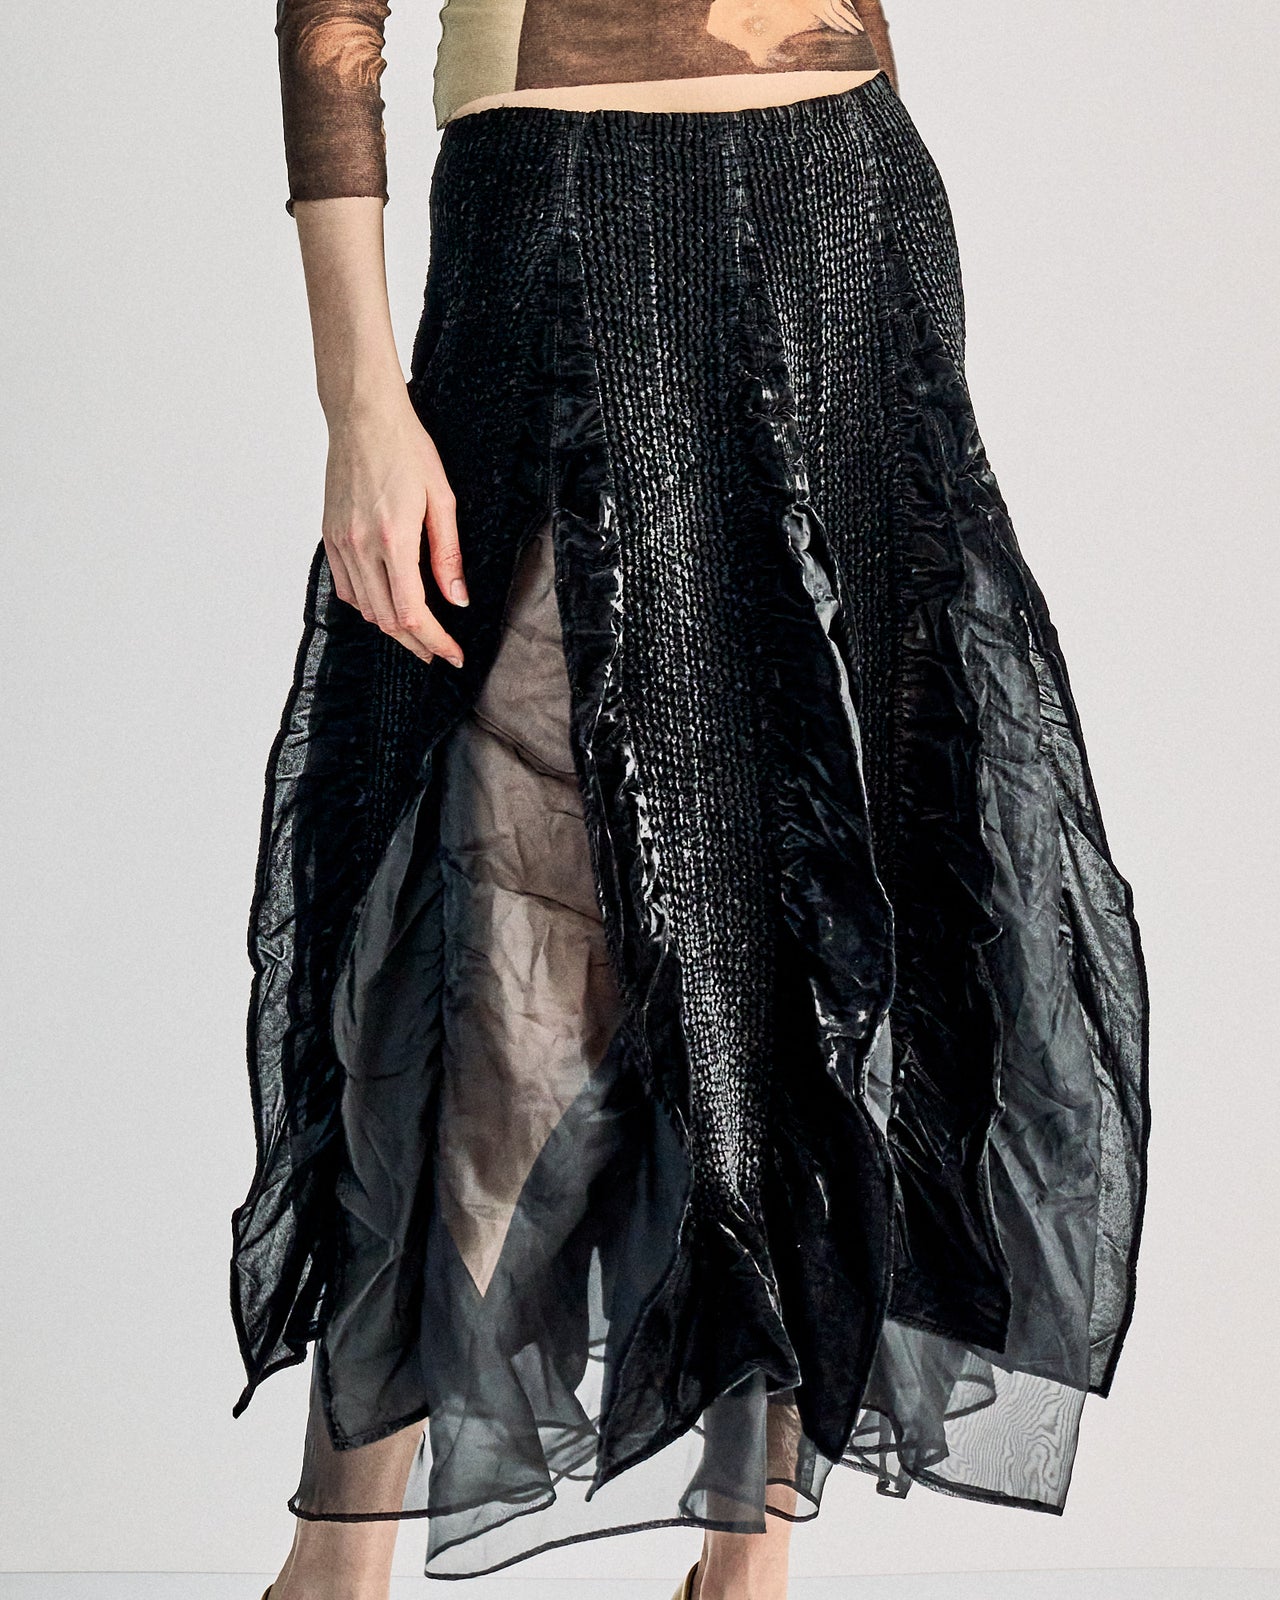 Peplum by Yoshiki Hishinuma Ribbed velvet ruffle skirt